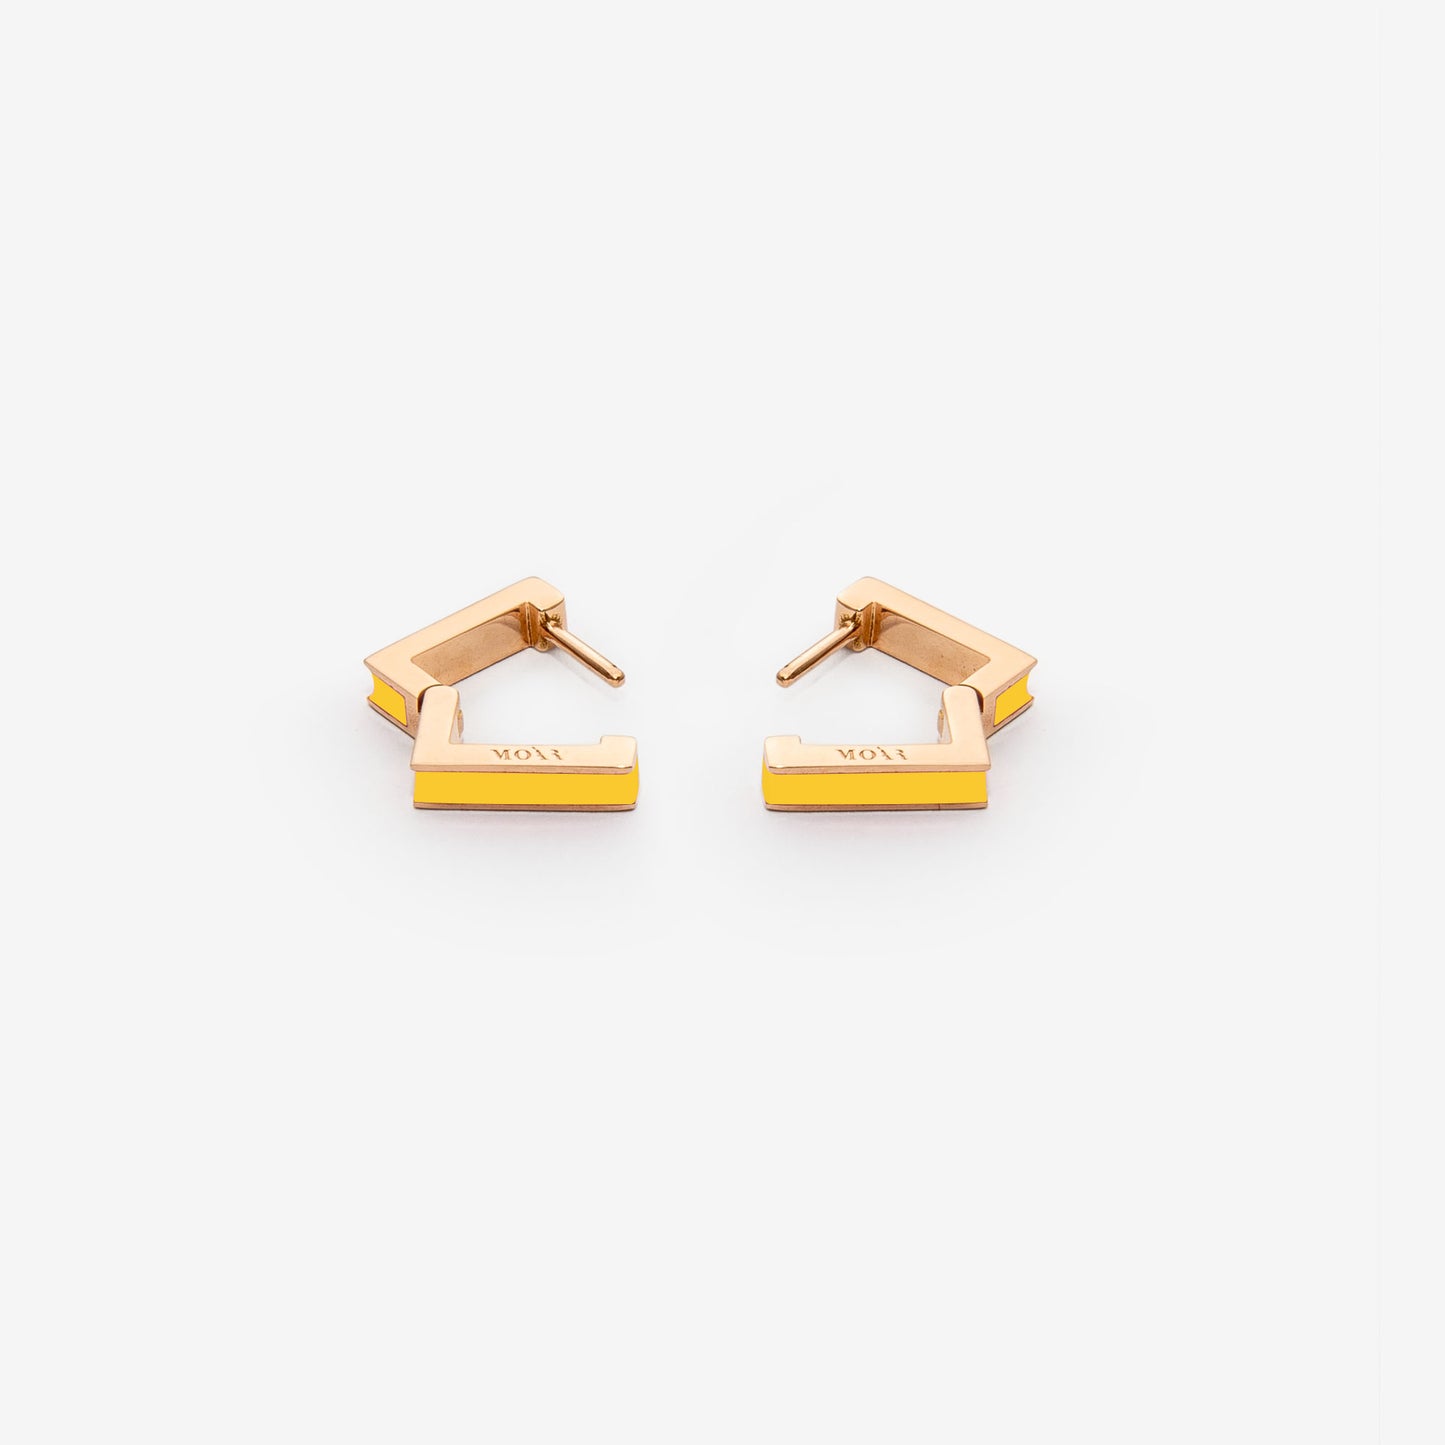 Square yellow earrings